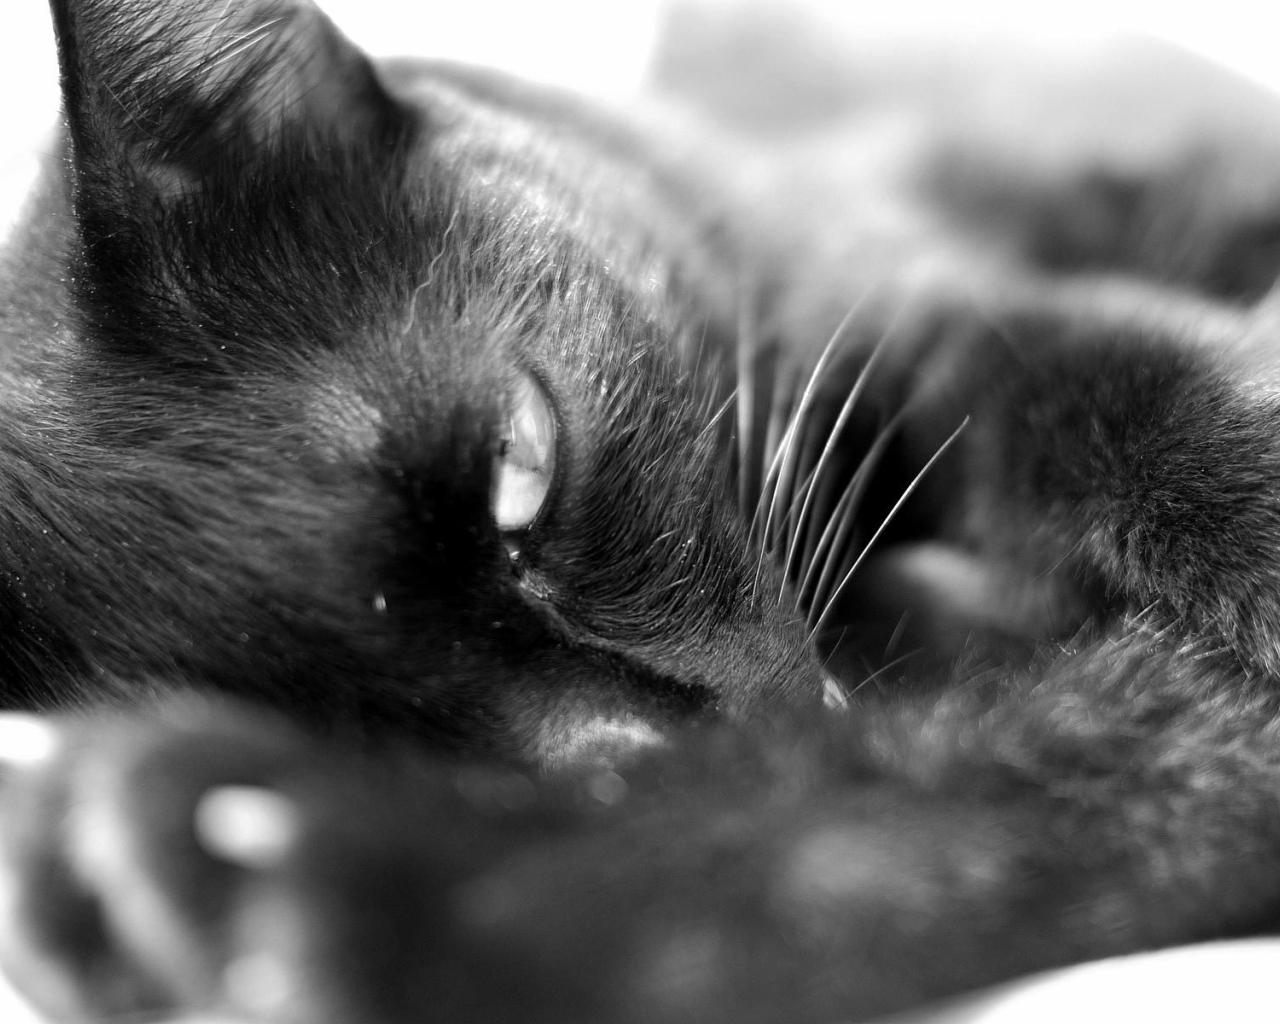 Sleepy black cat